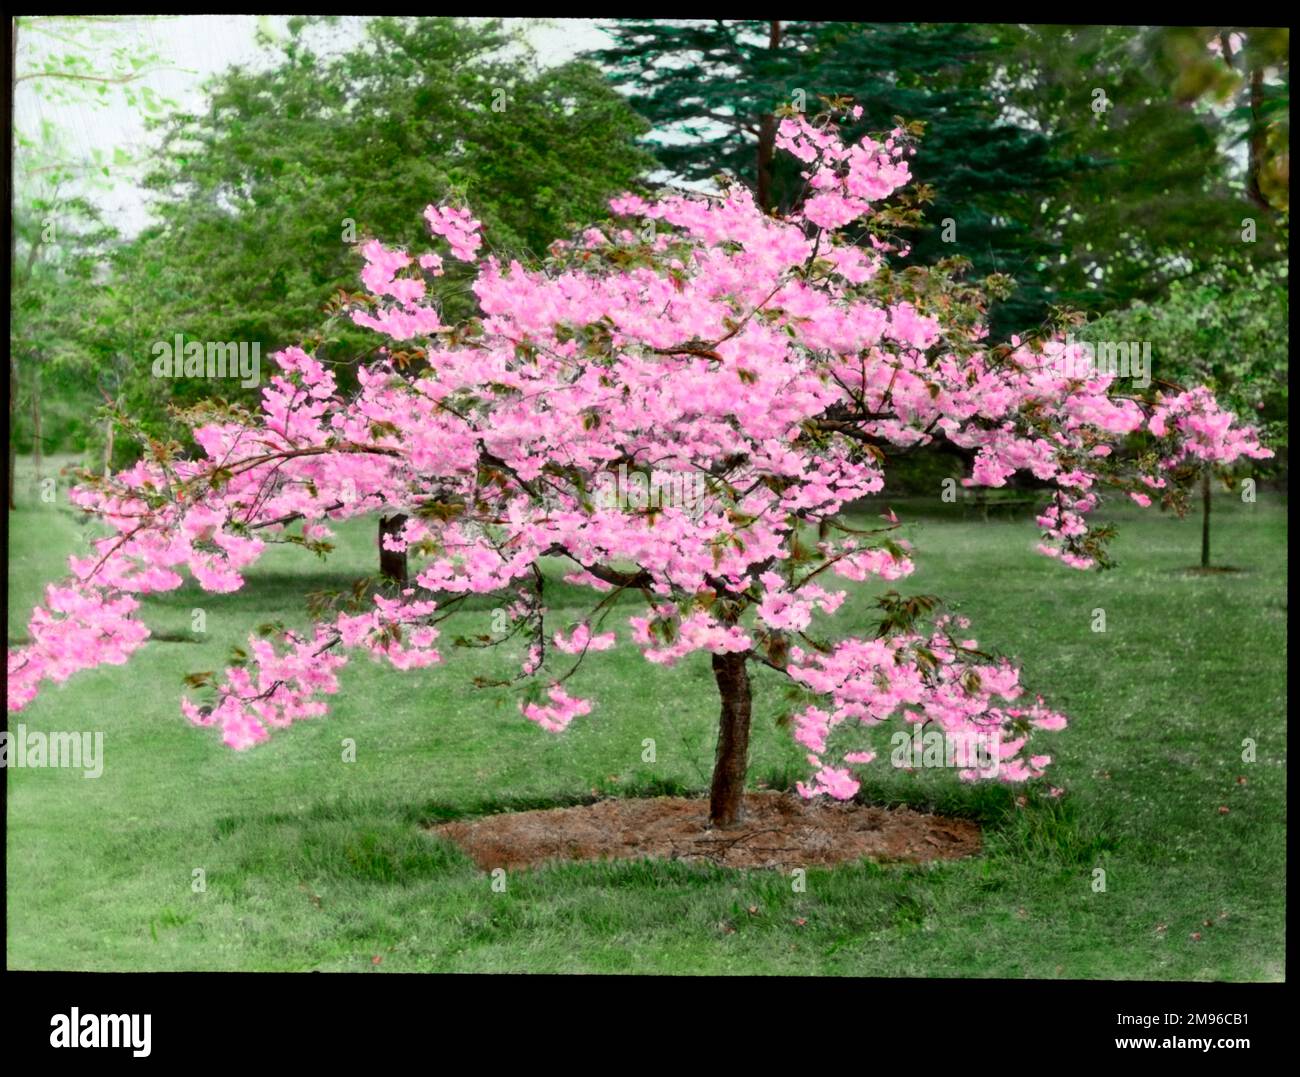 Prunus (Flowering Cherry Tree), laden with bright pink blossom. Stock Photo